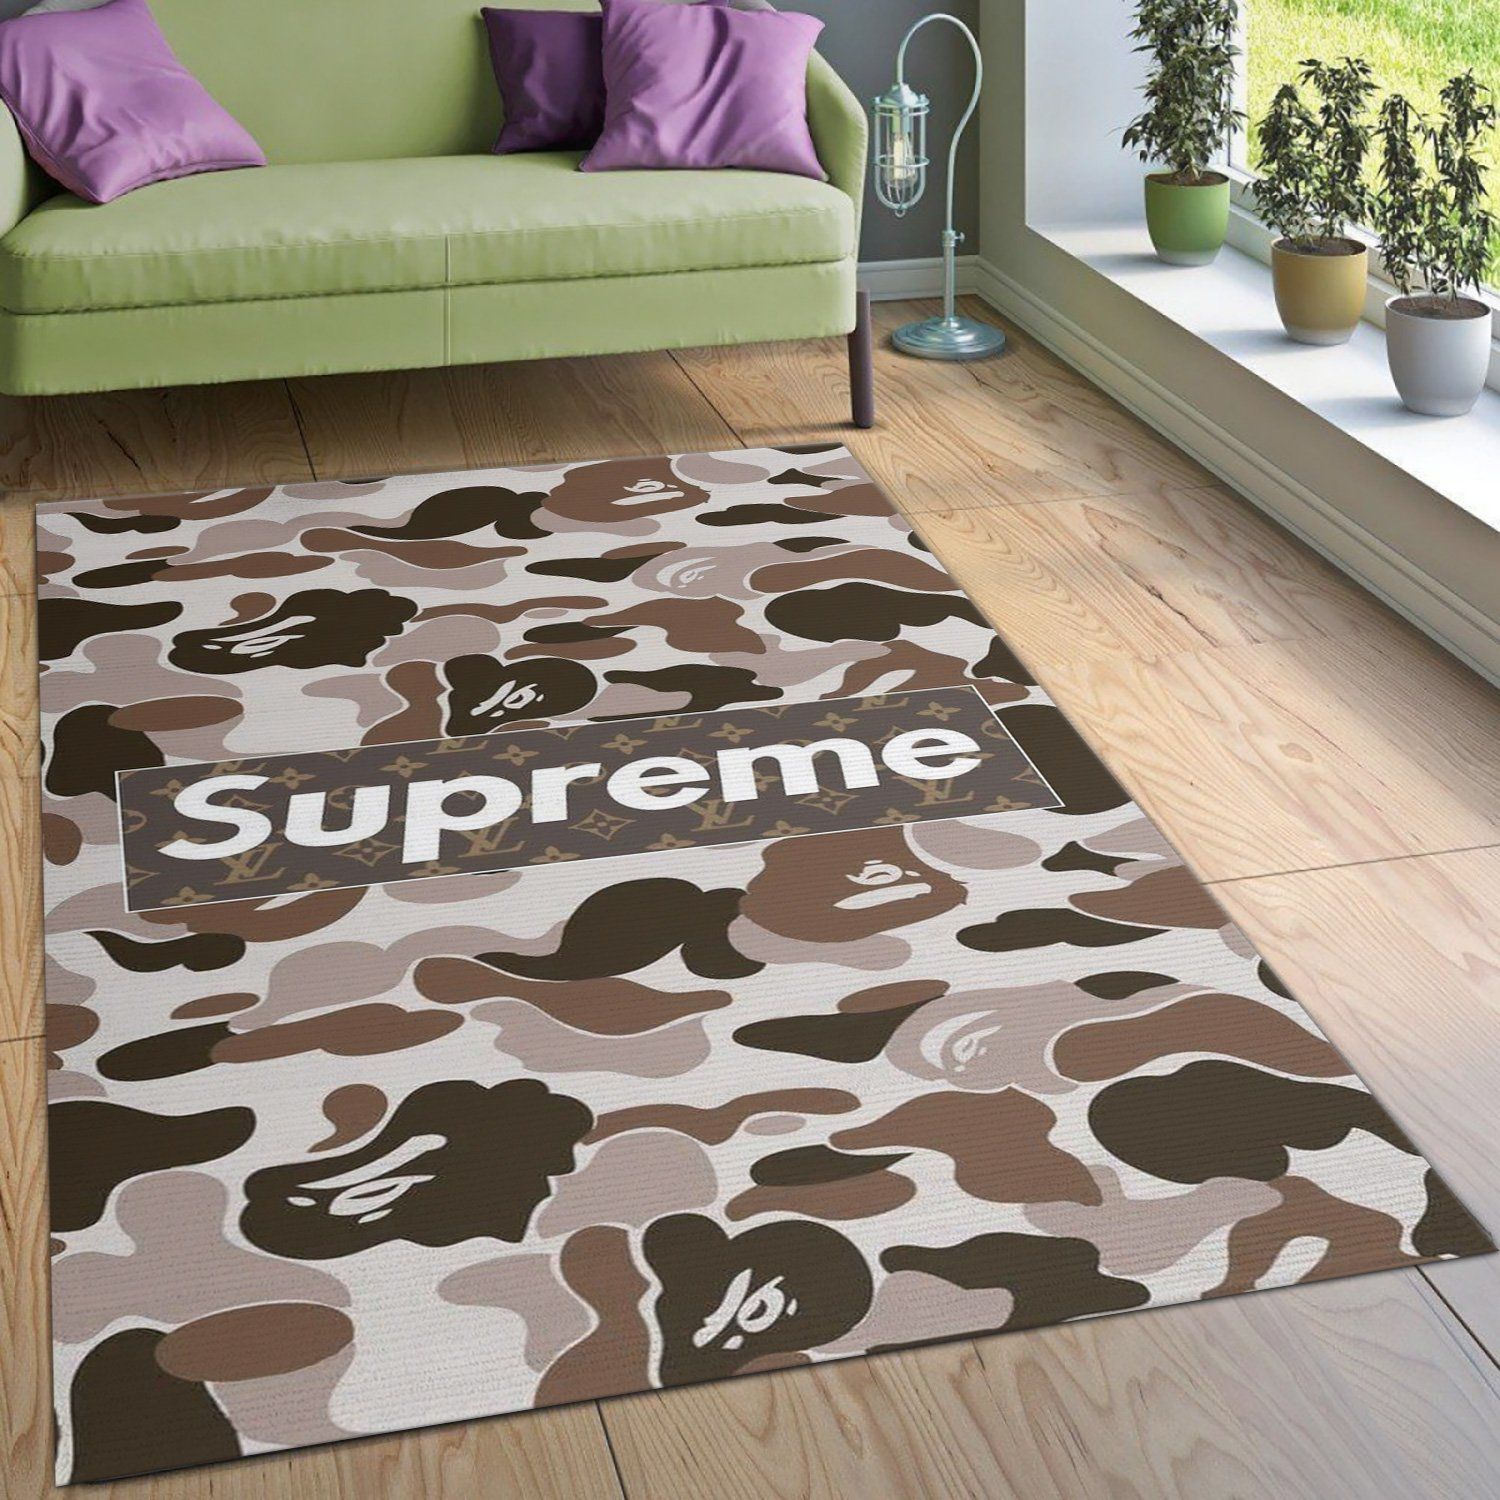 Supreme Hypebeast Floor Pillow by Bape